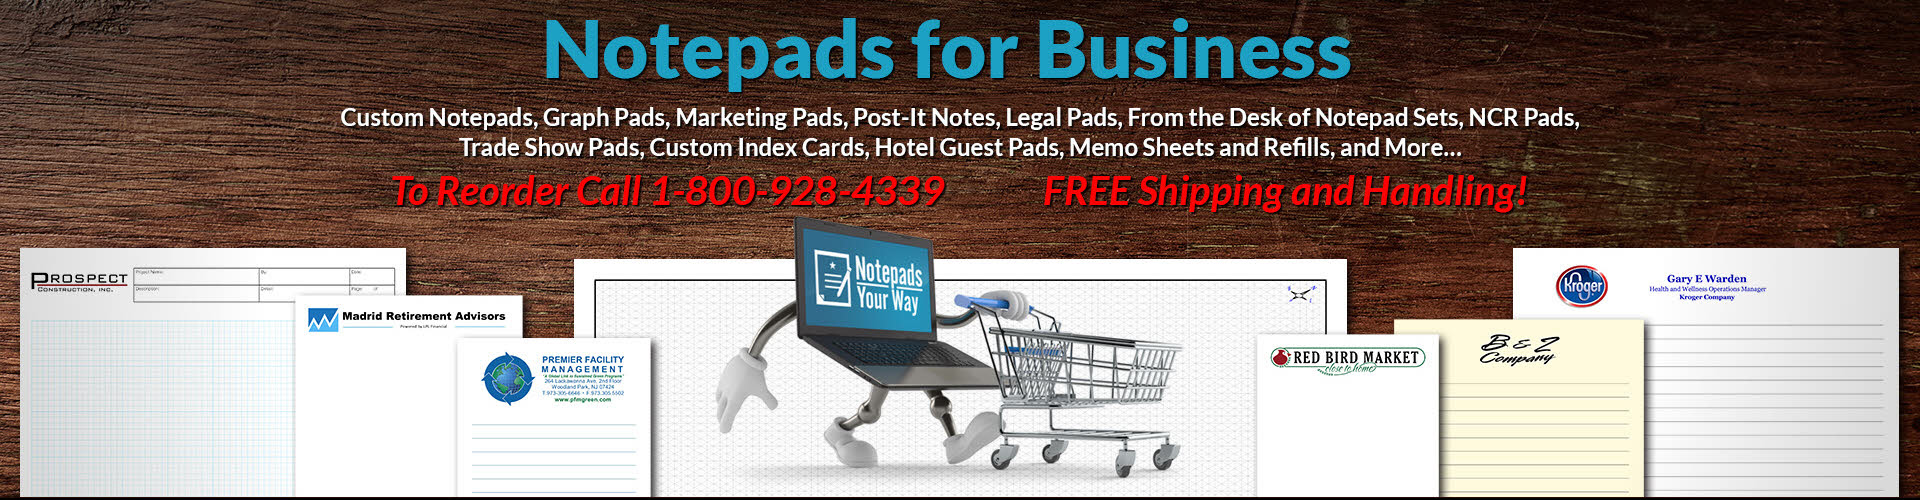 Business Notepads